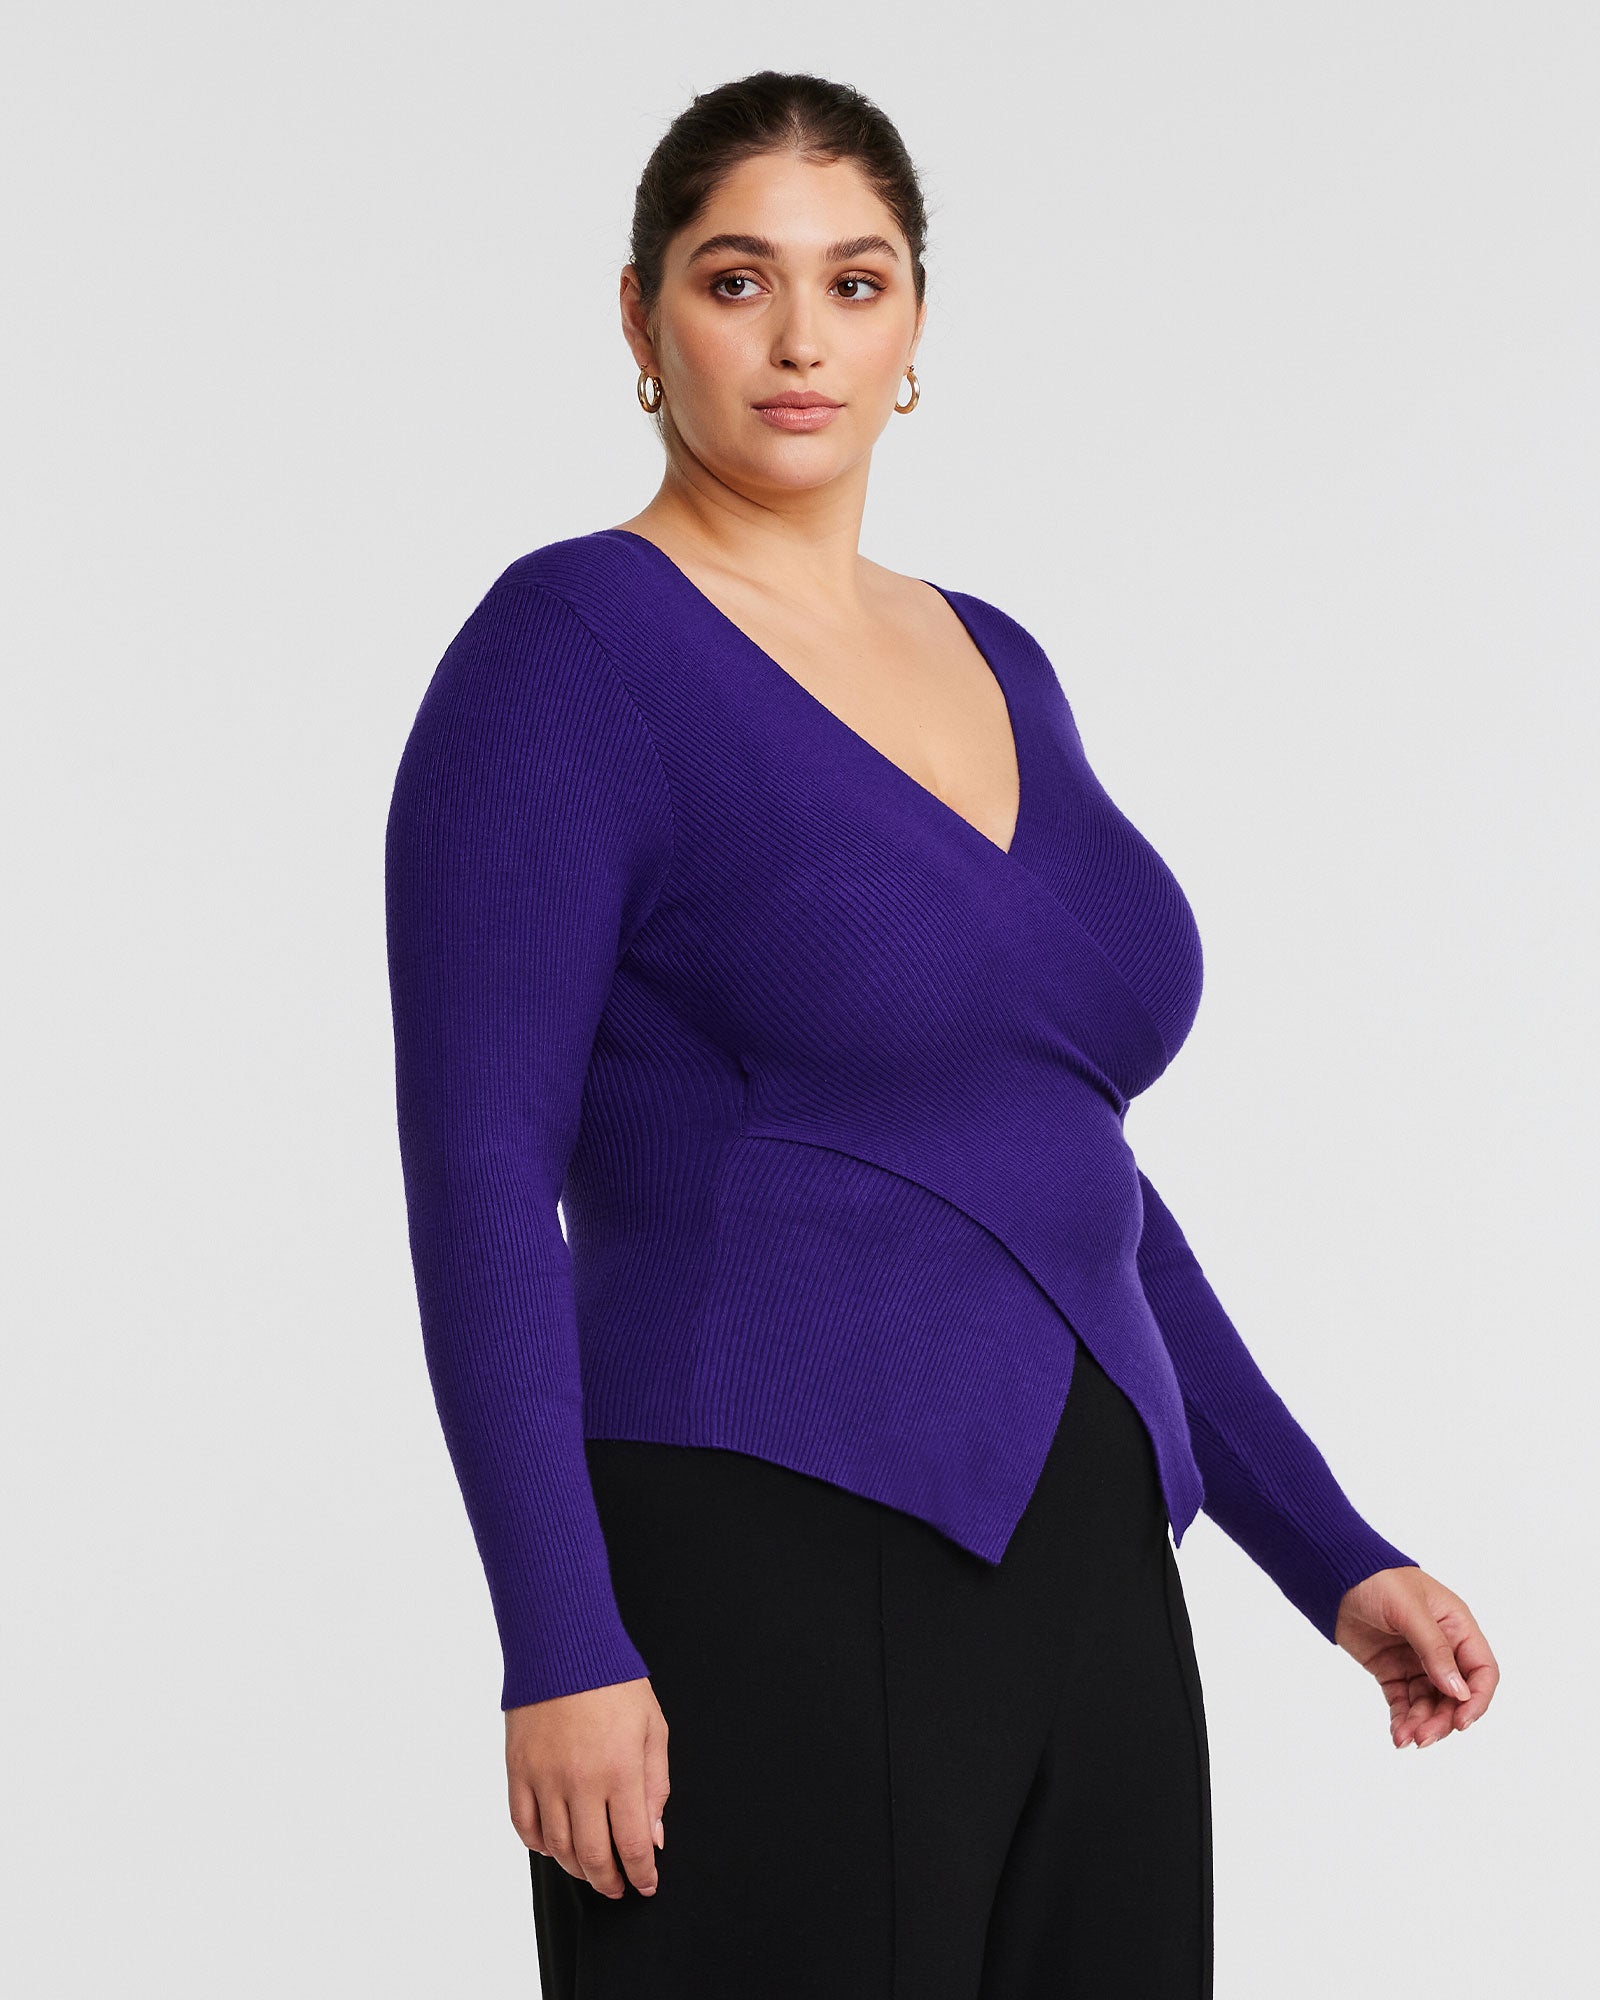 A woman wearing an Estelle Purple Wrap It Up Long Sleeve Knit Sweater and black pants.